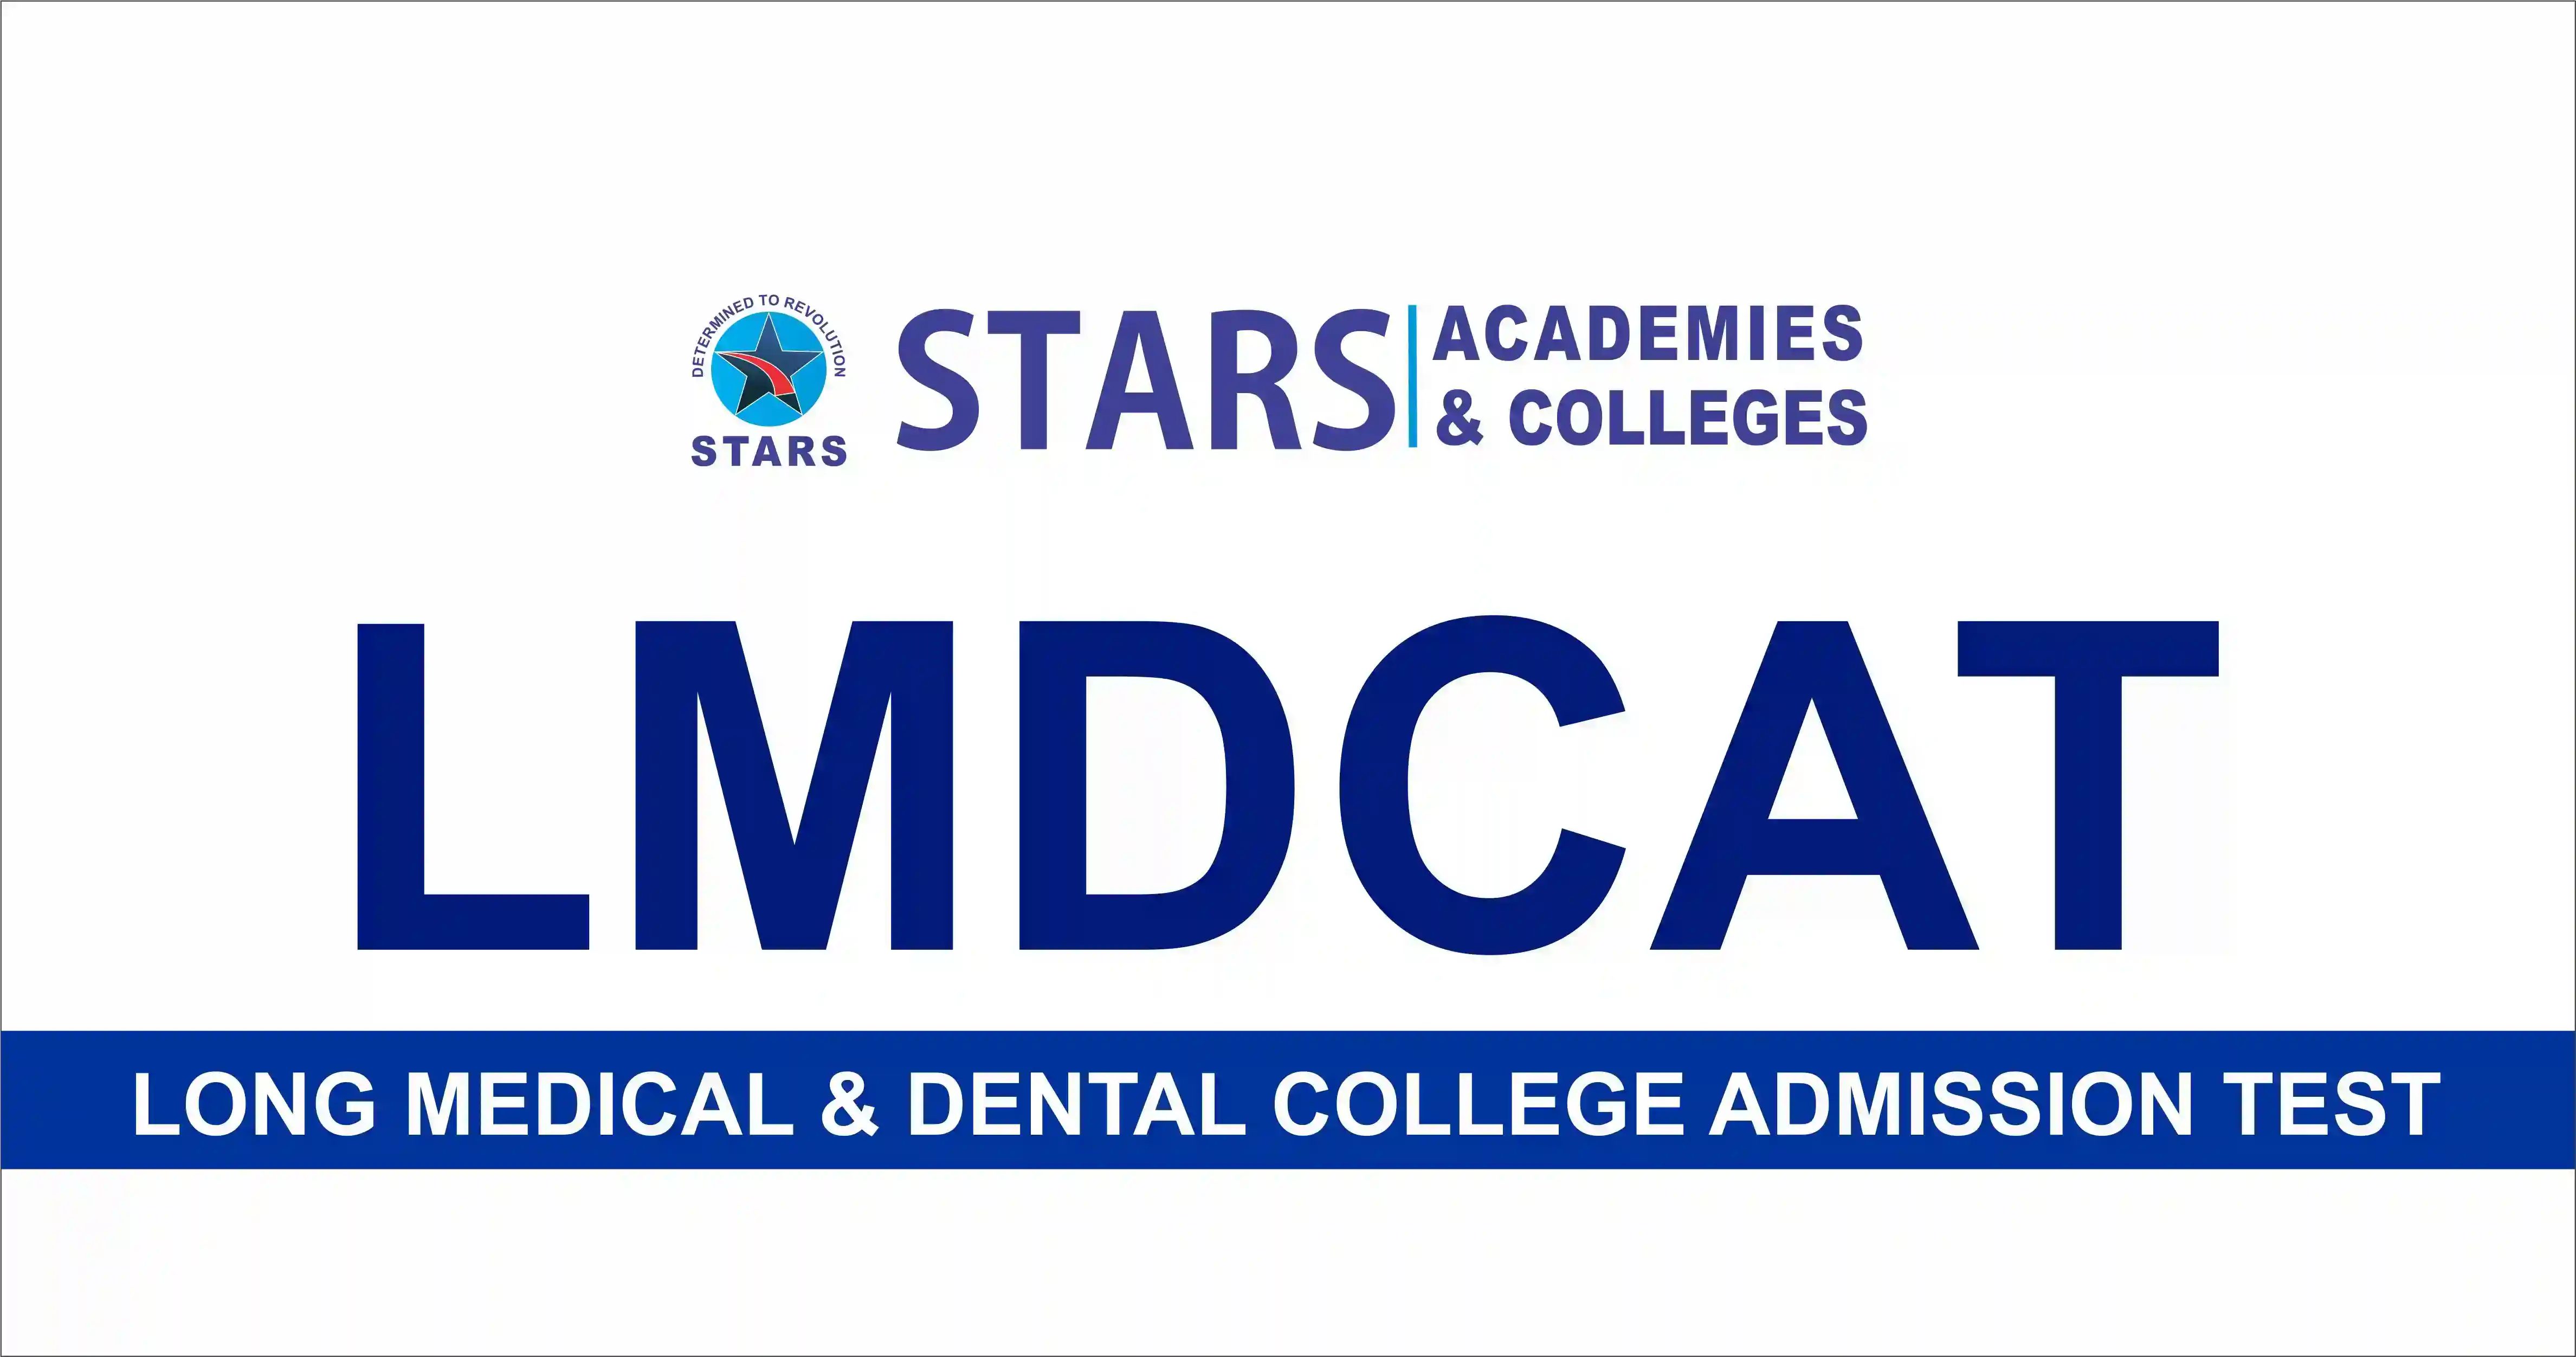 Stars Academy LMDCAT Information